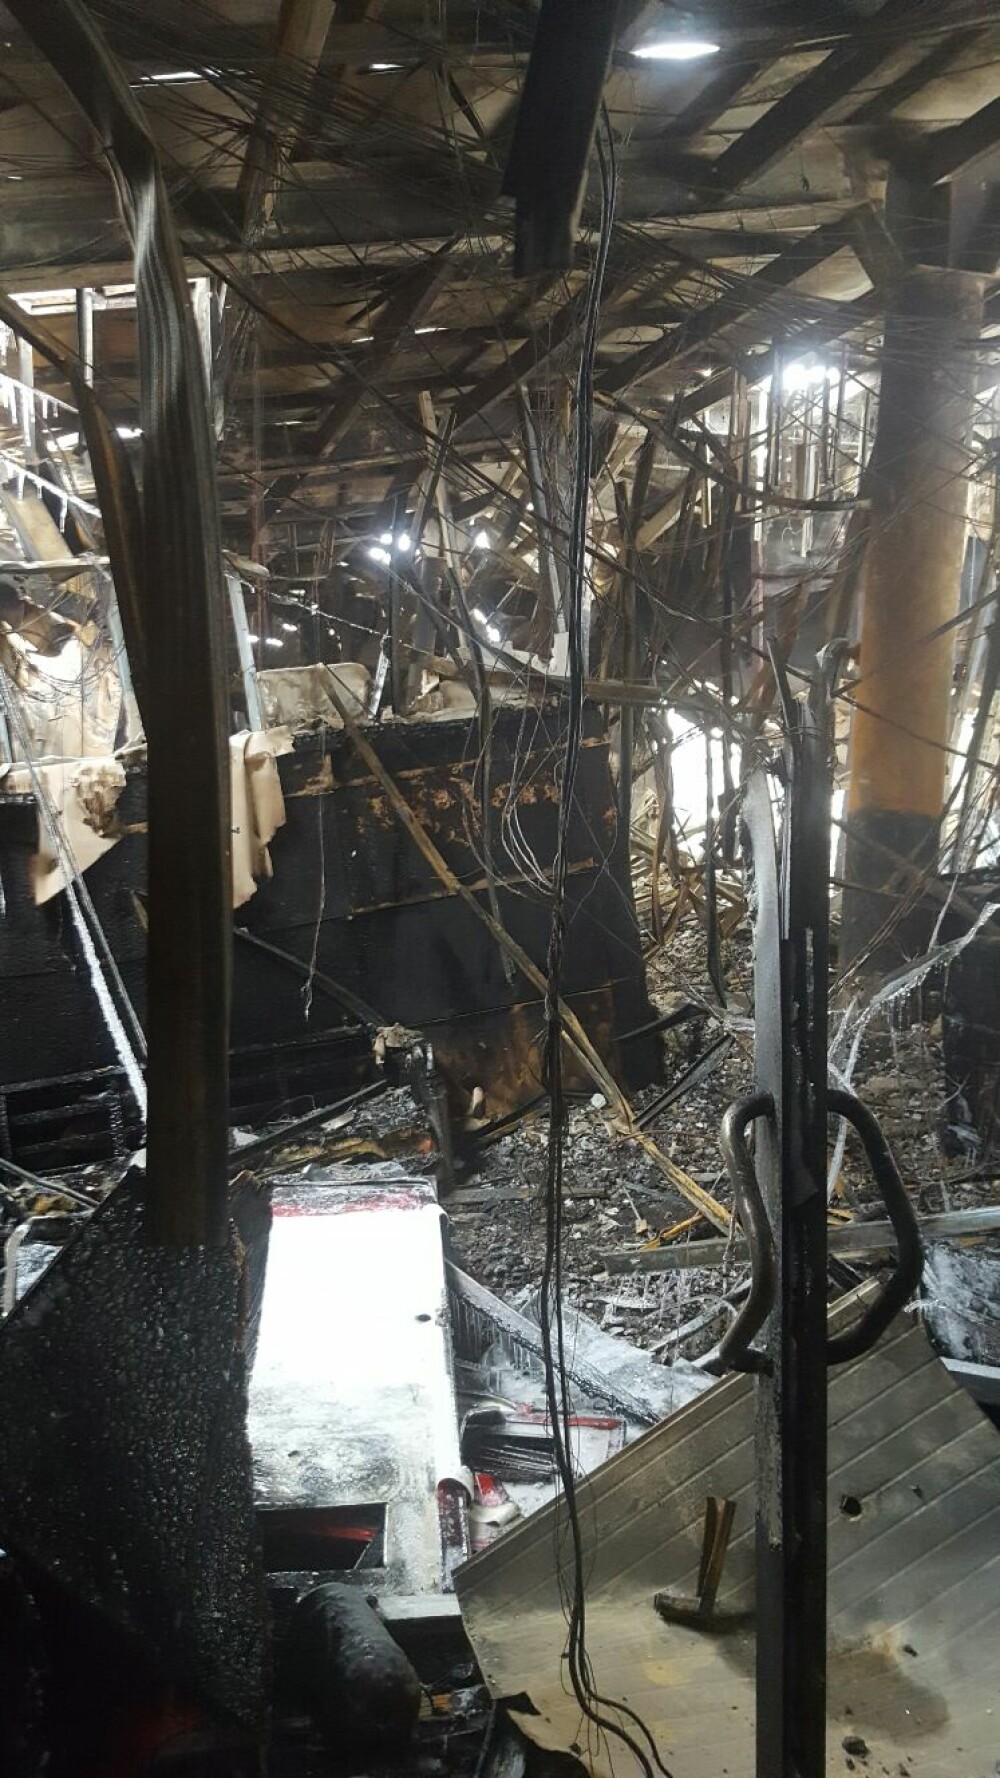 Noi imagini cu incendiul din Bamboo, filmate din interior. Joshua Castellano acuza ca cineva i-a dat foc la club - Imaginea 1